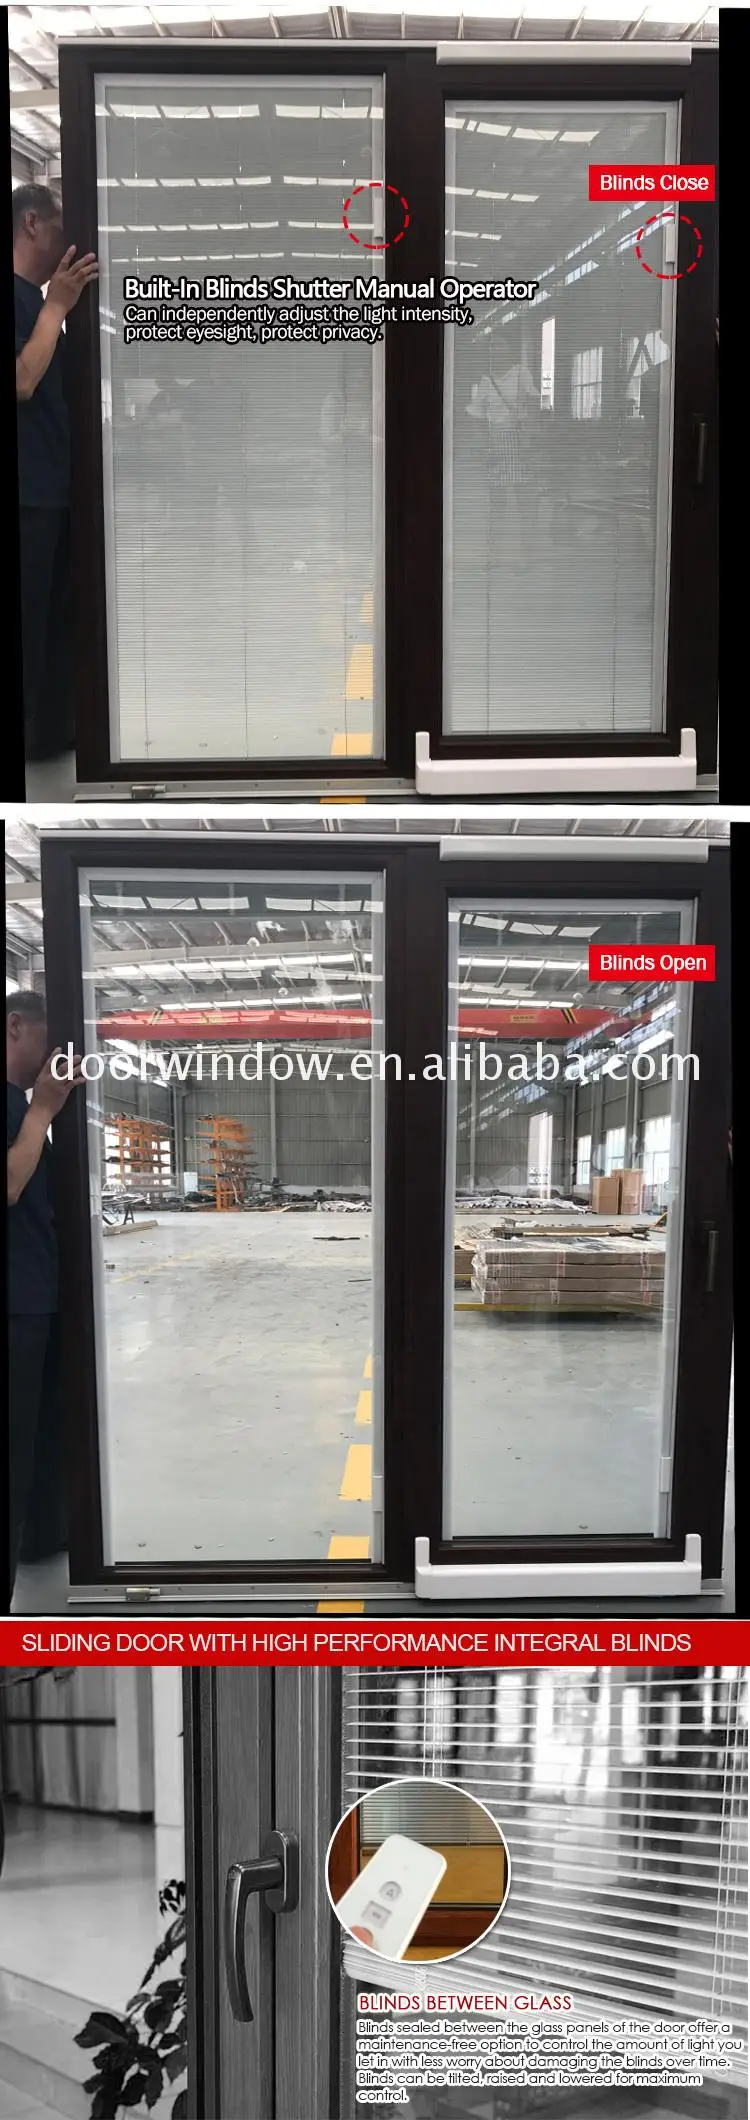 Wood sliding door system window grills design pictures for windows